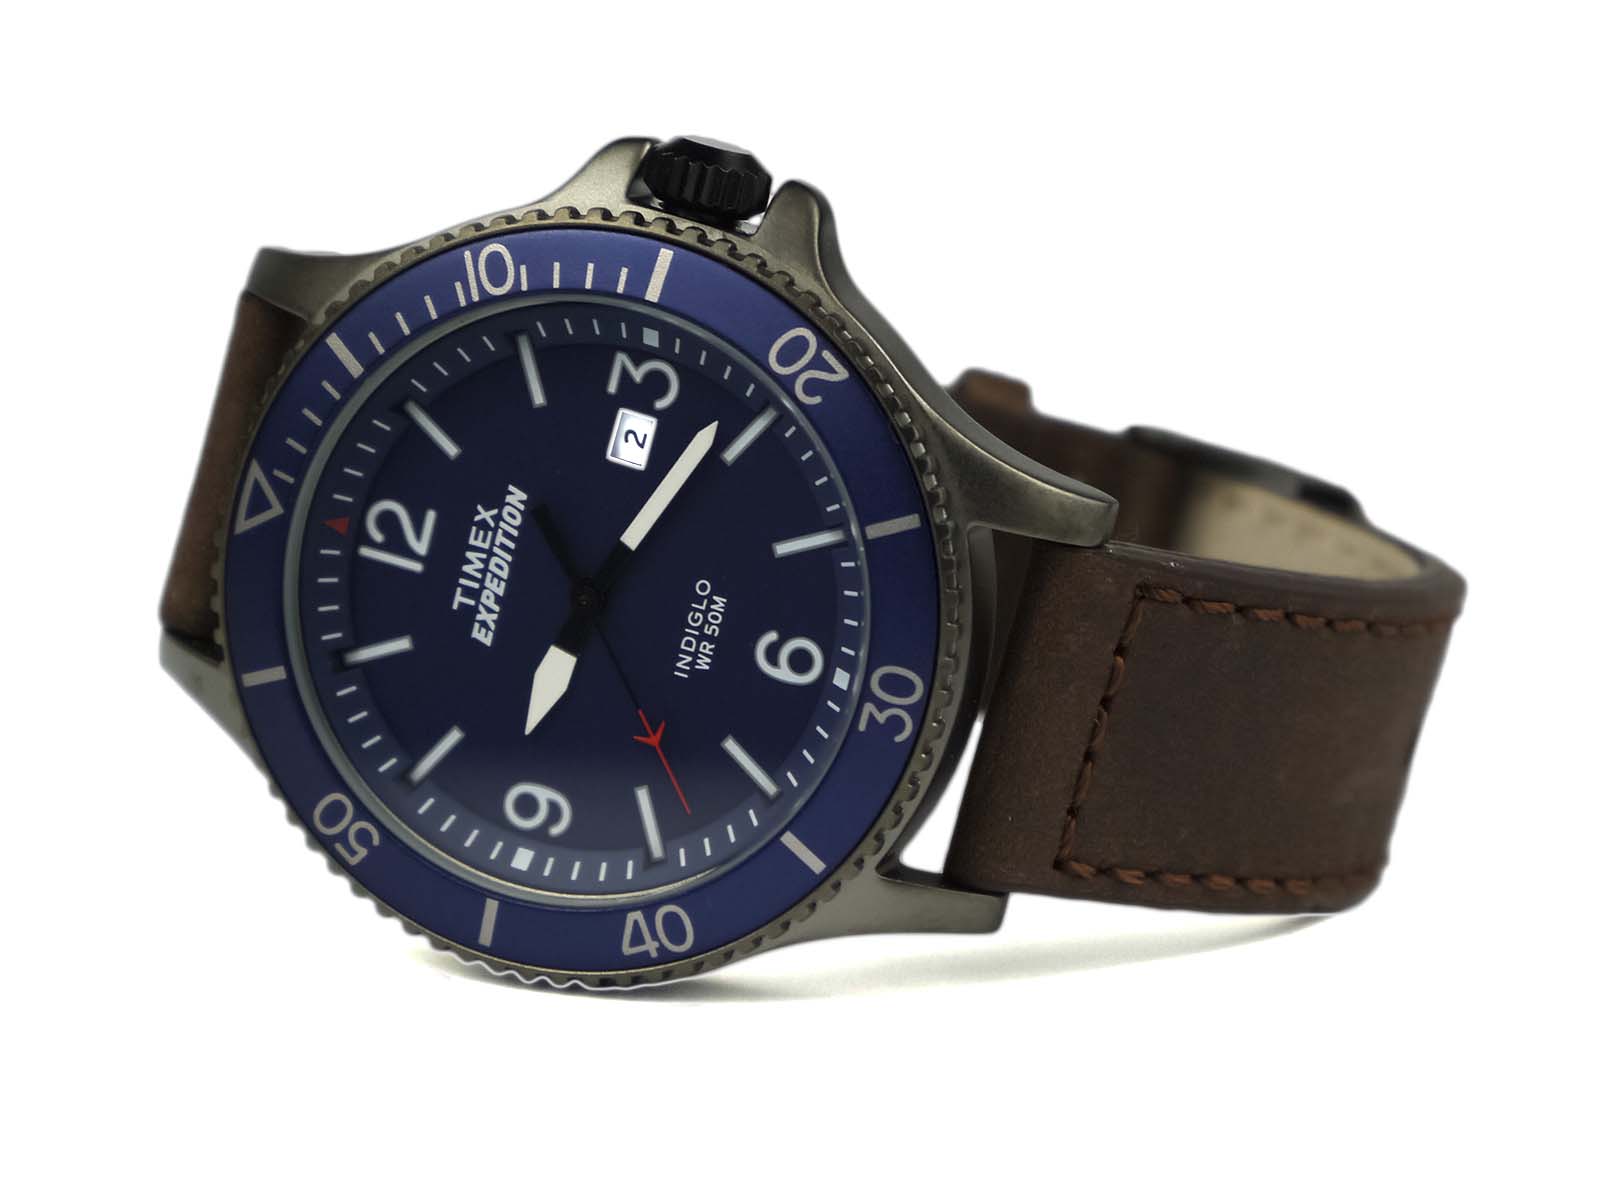 Timex TW4B10700 Expedition Ranger Brown Gunmetal Blue Leather Strap Watch